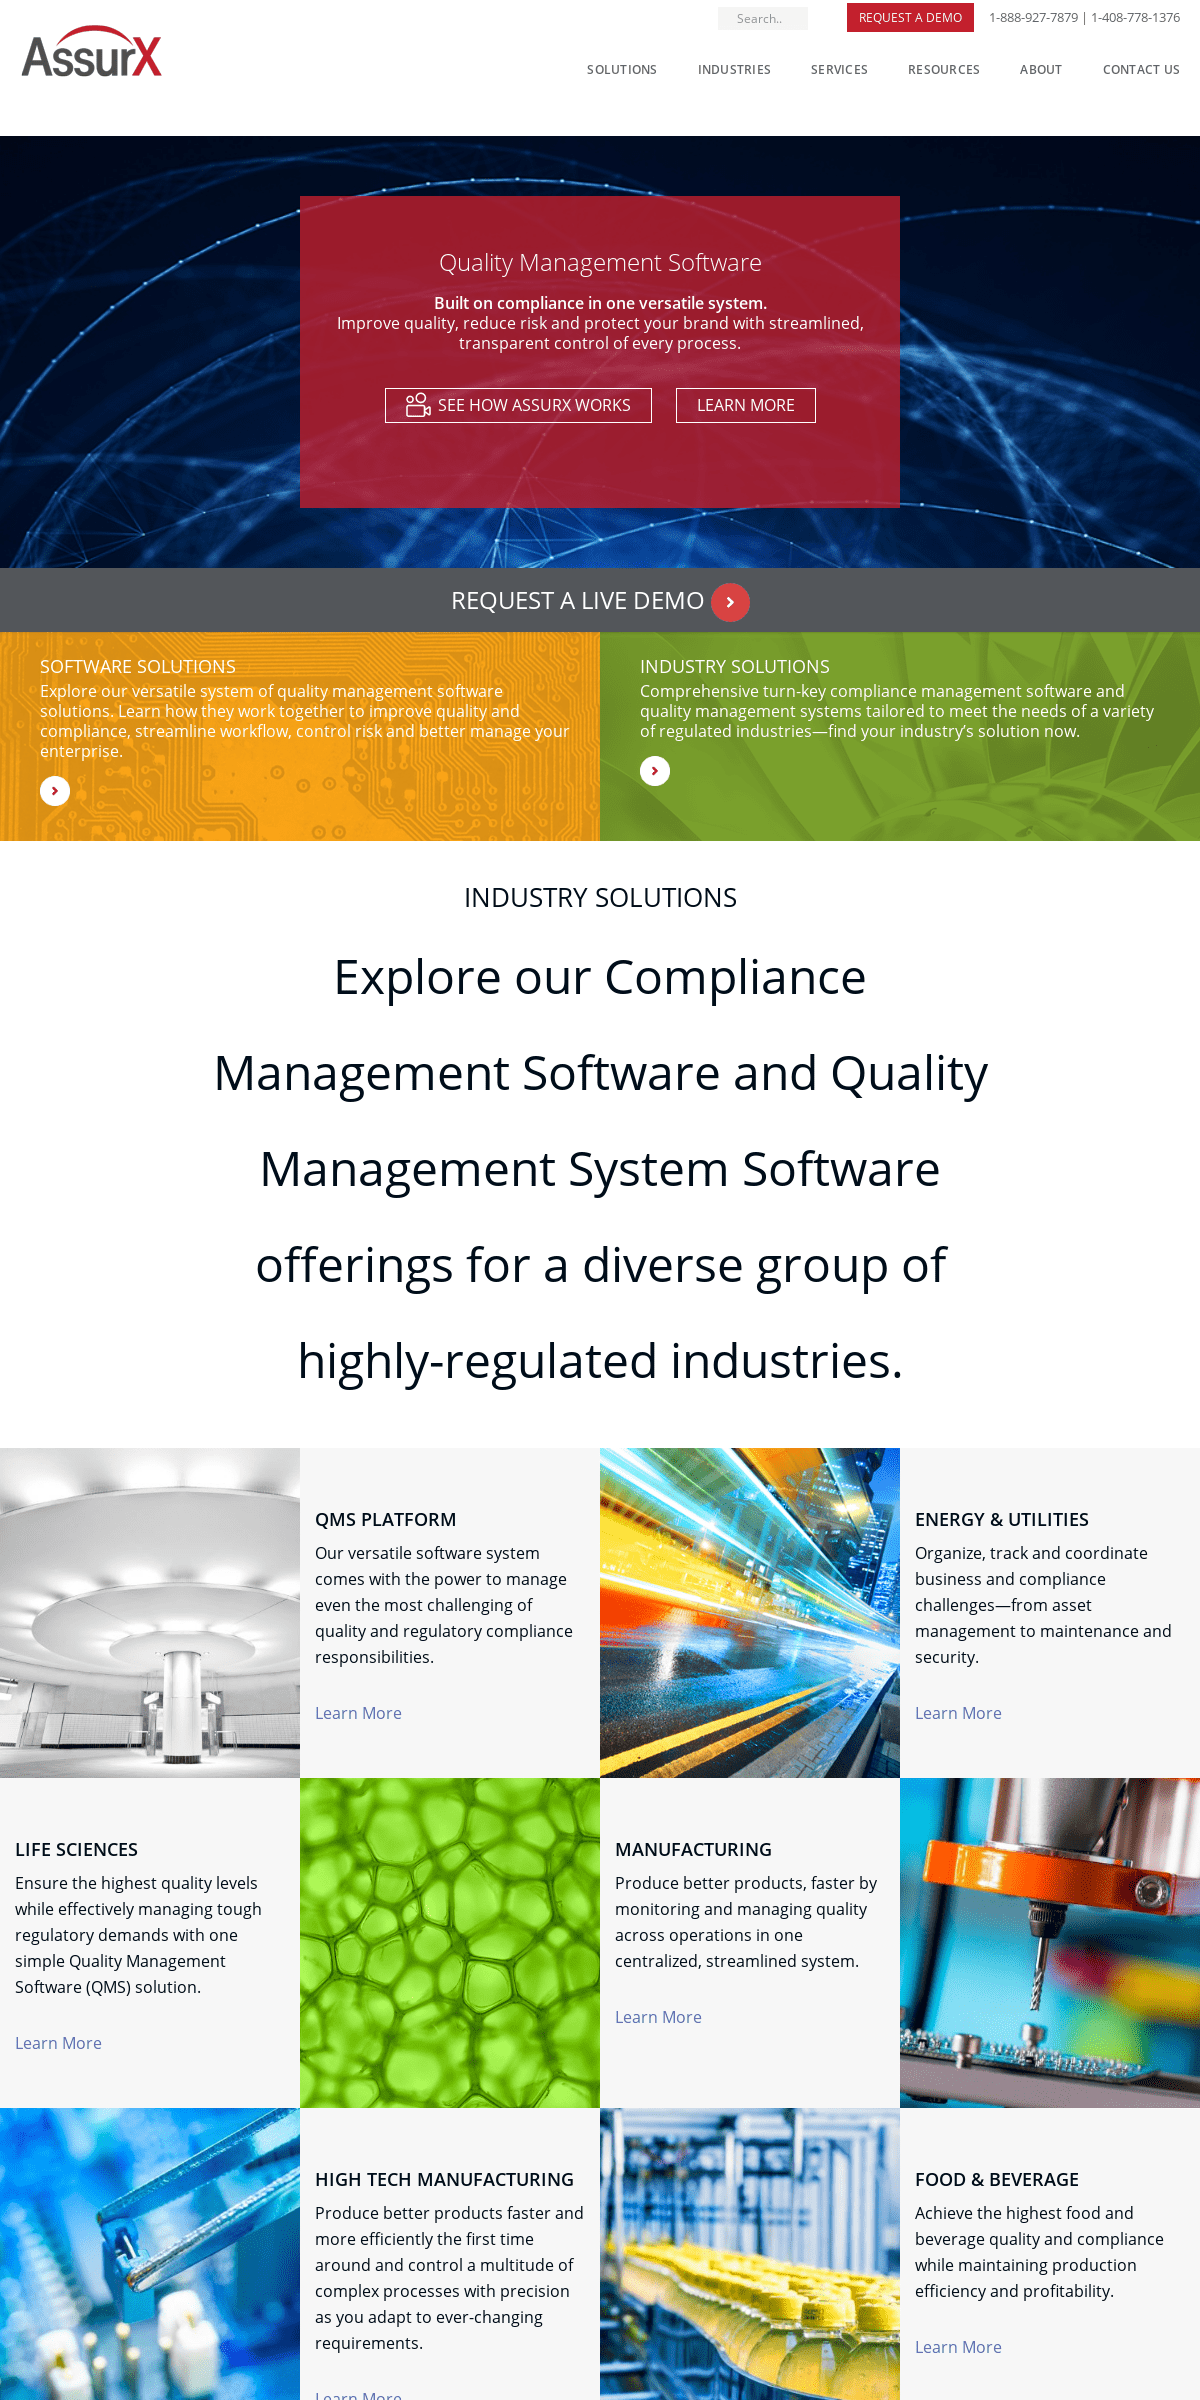 Quality Management & Regulatory Compliance System Software - AssurX